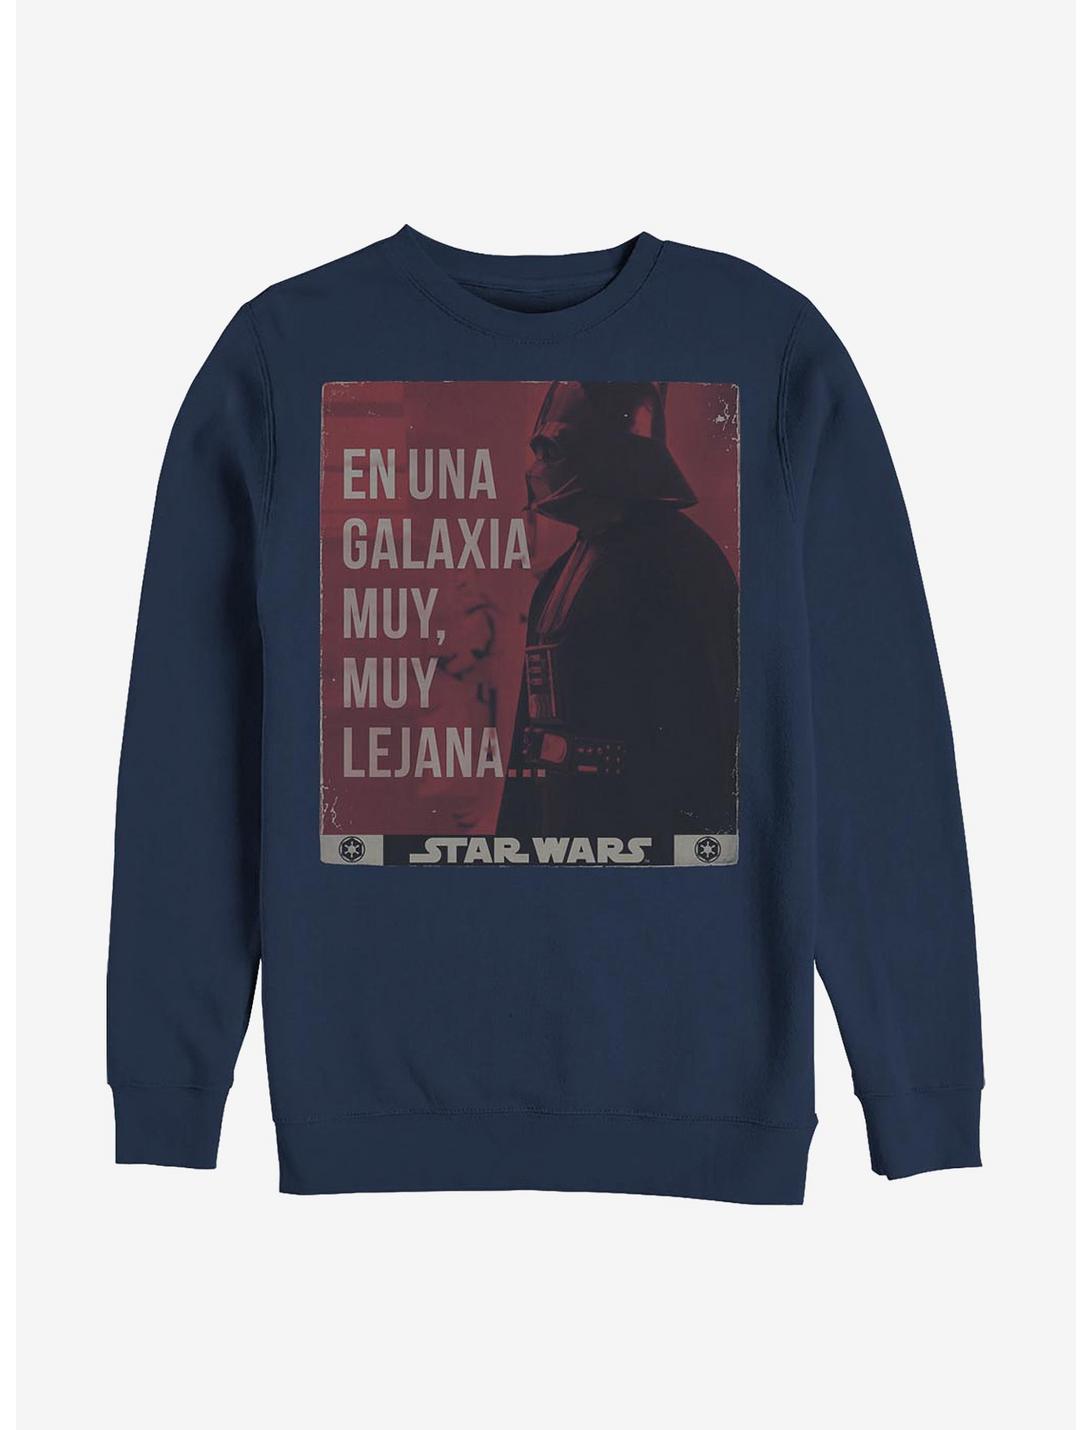 Star Wars Una Galaxia Crew Sweatshirt, NAVY, hi-res